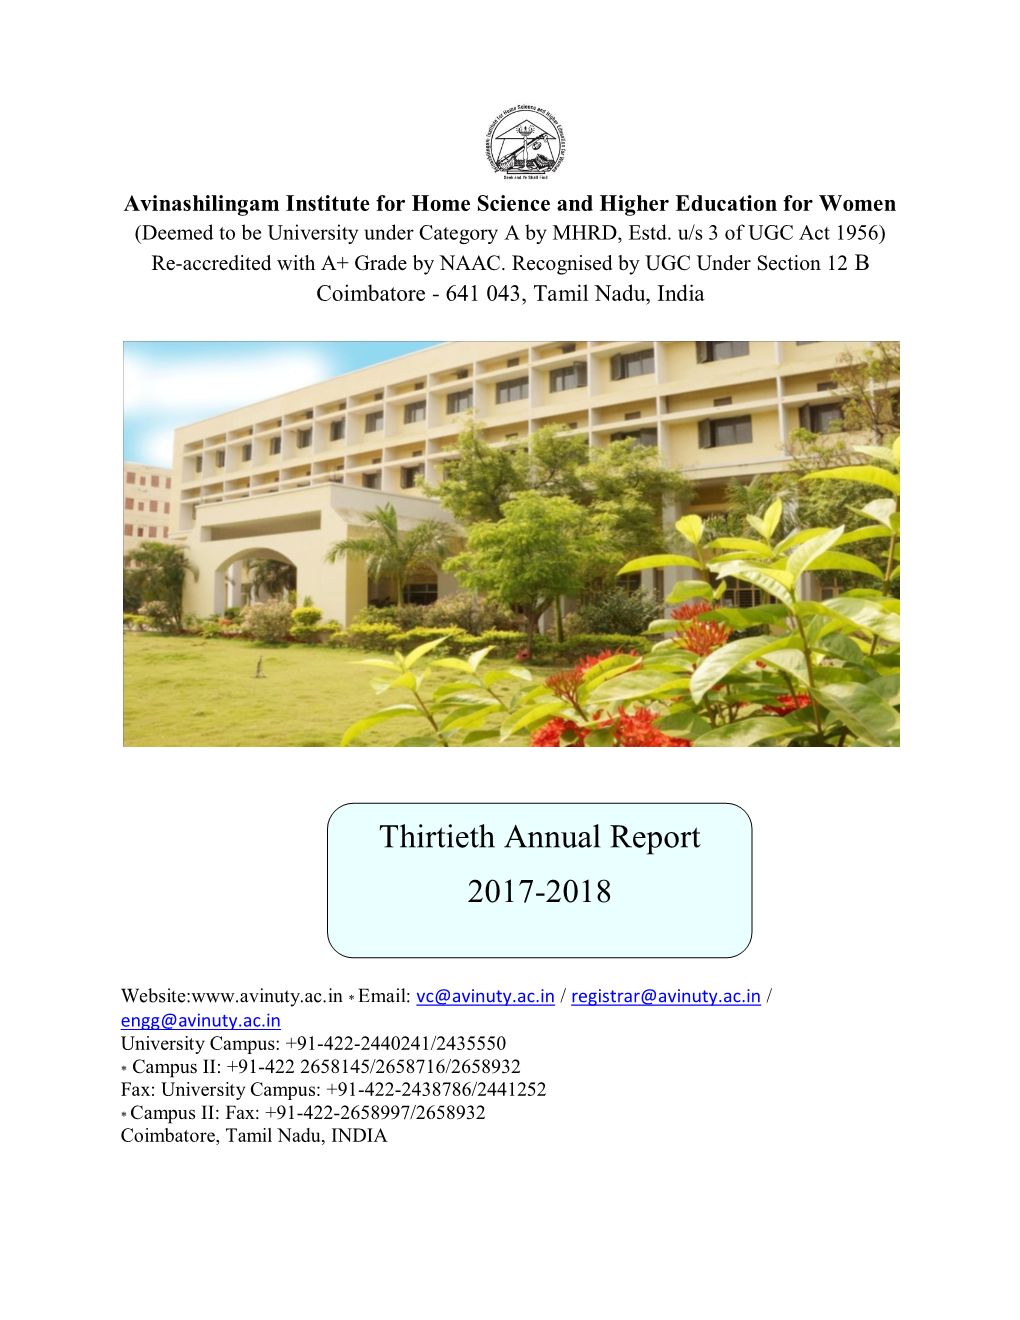 Thirtieth Annual Report 2017-2018